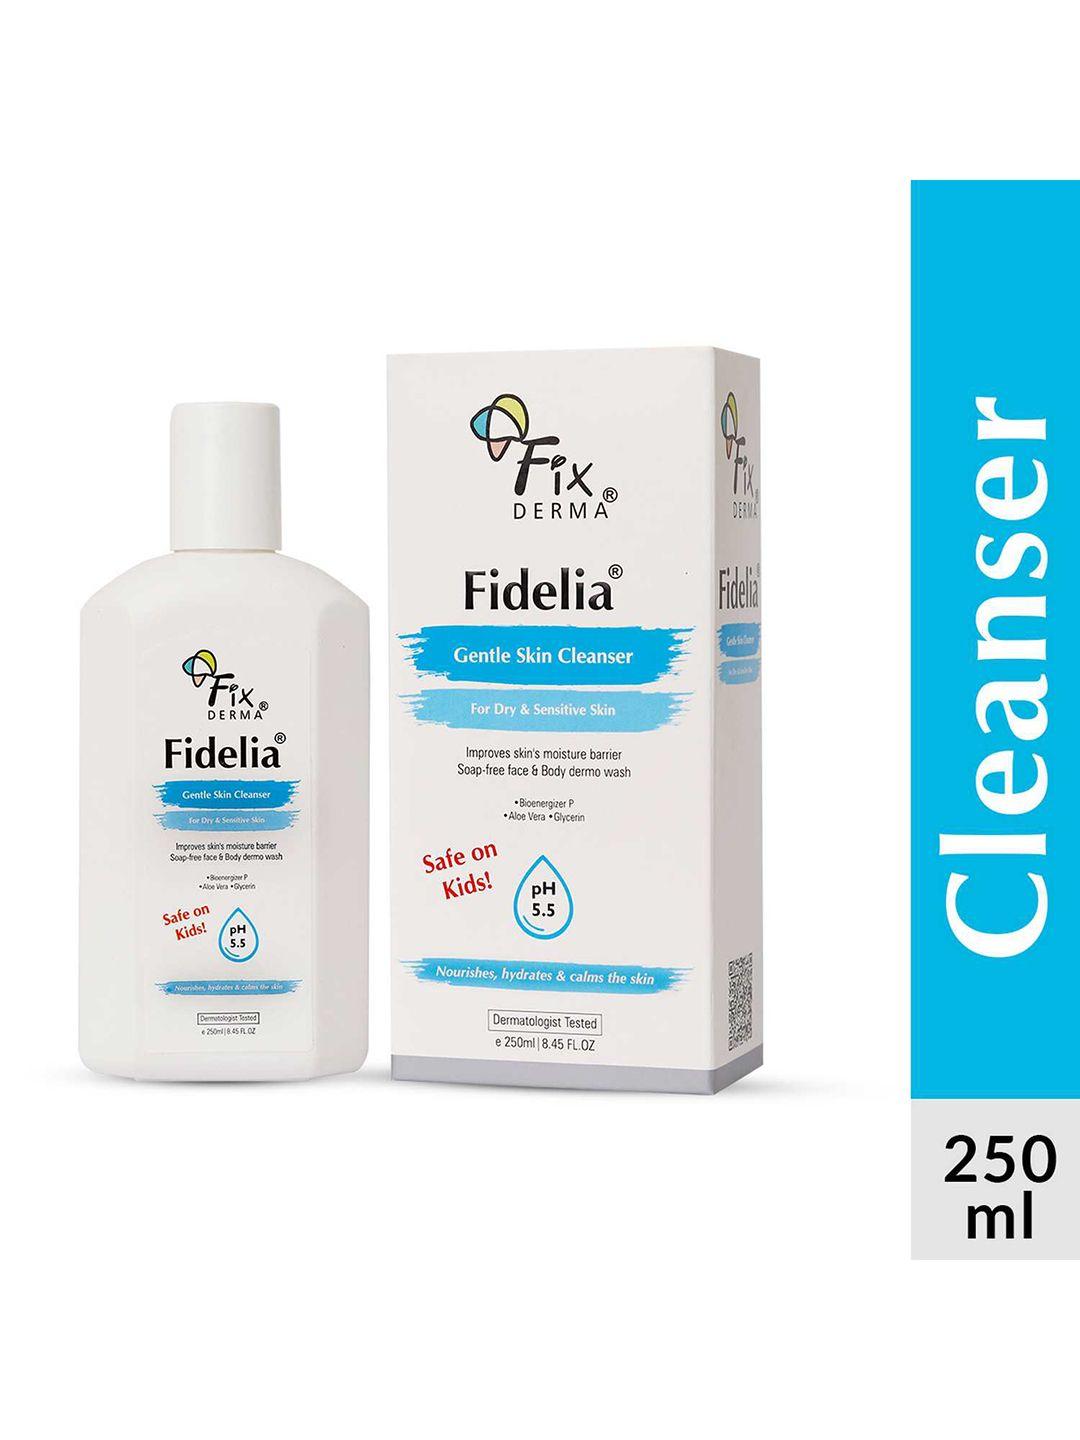 fixderma fidelia ph 5.5 gentle skin cleanser for dry & sensitive skin - 250ml